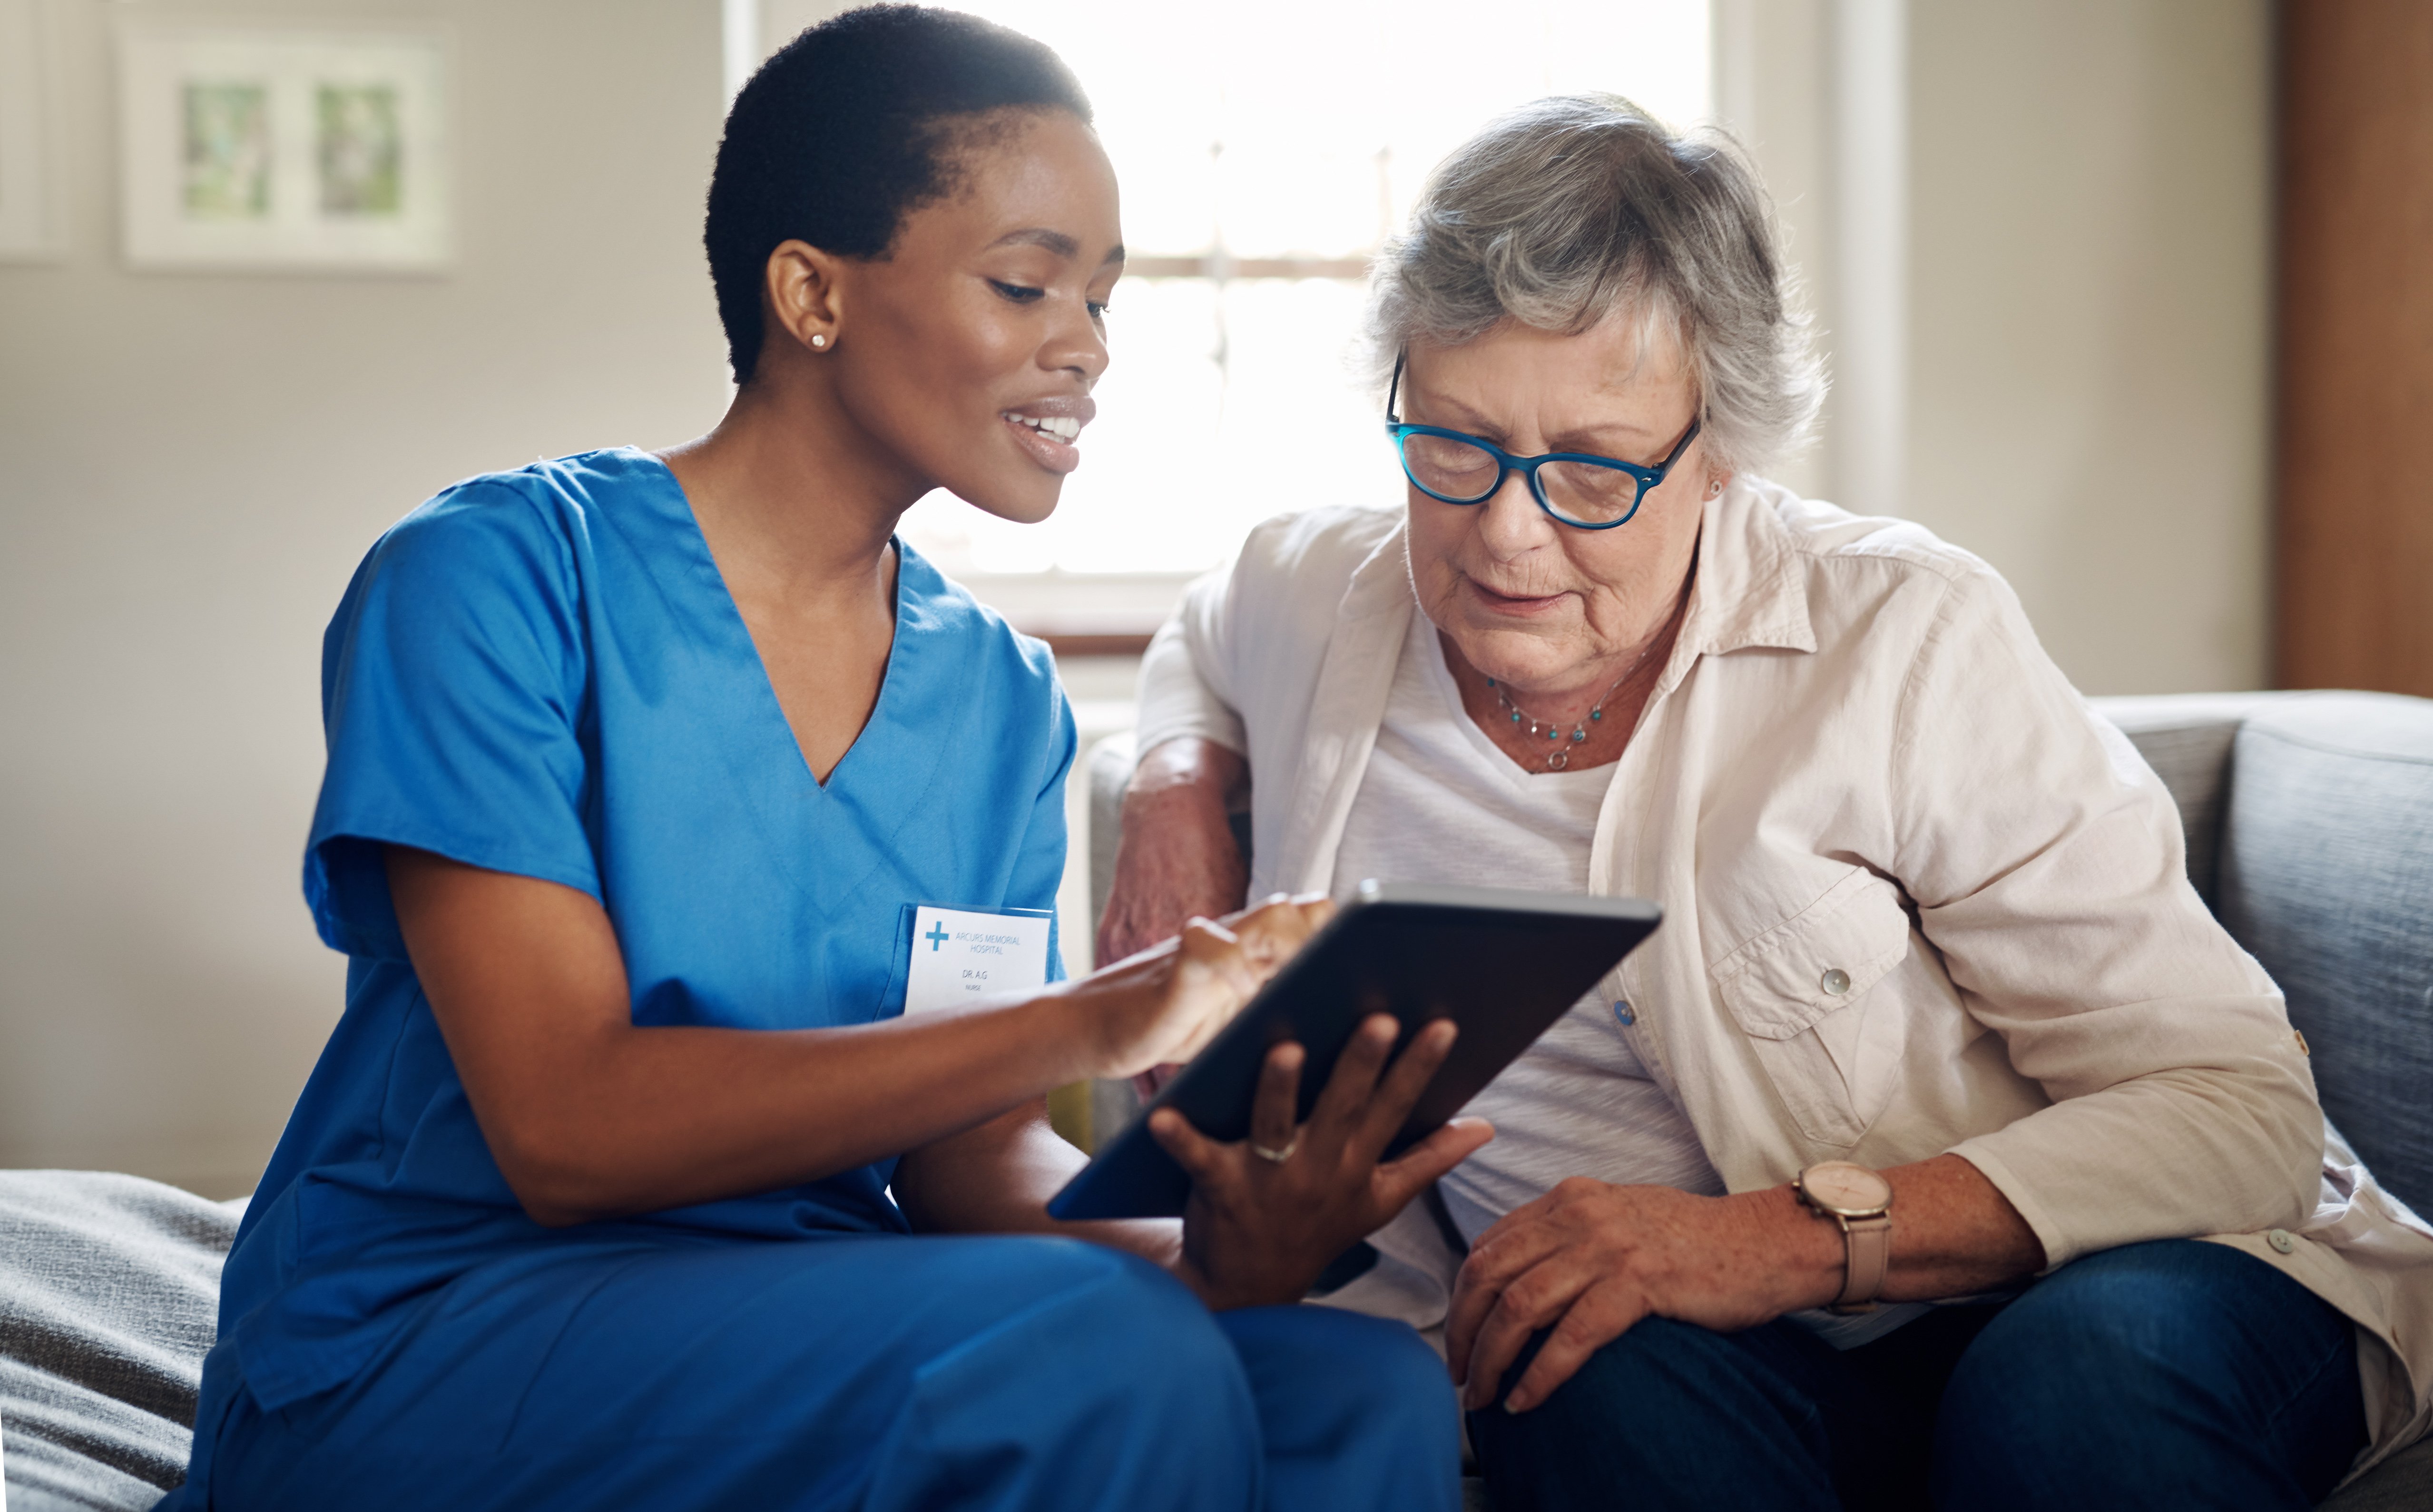 Nurse showing an elderly woman information on a tablet